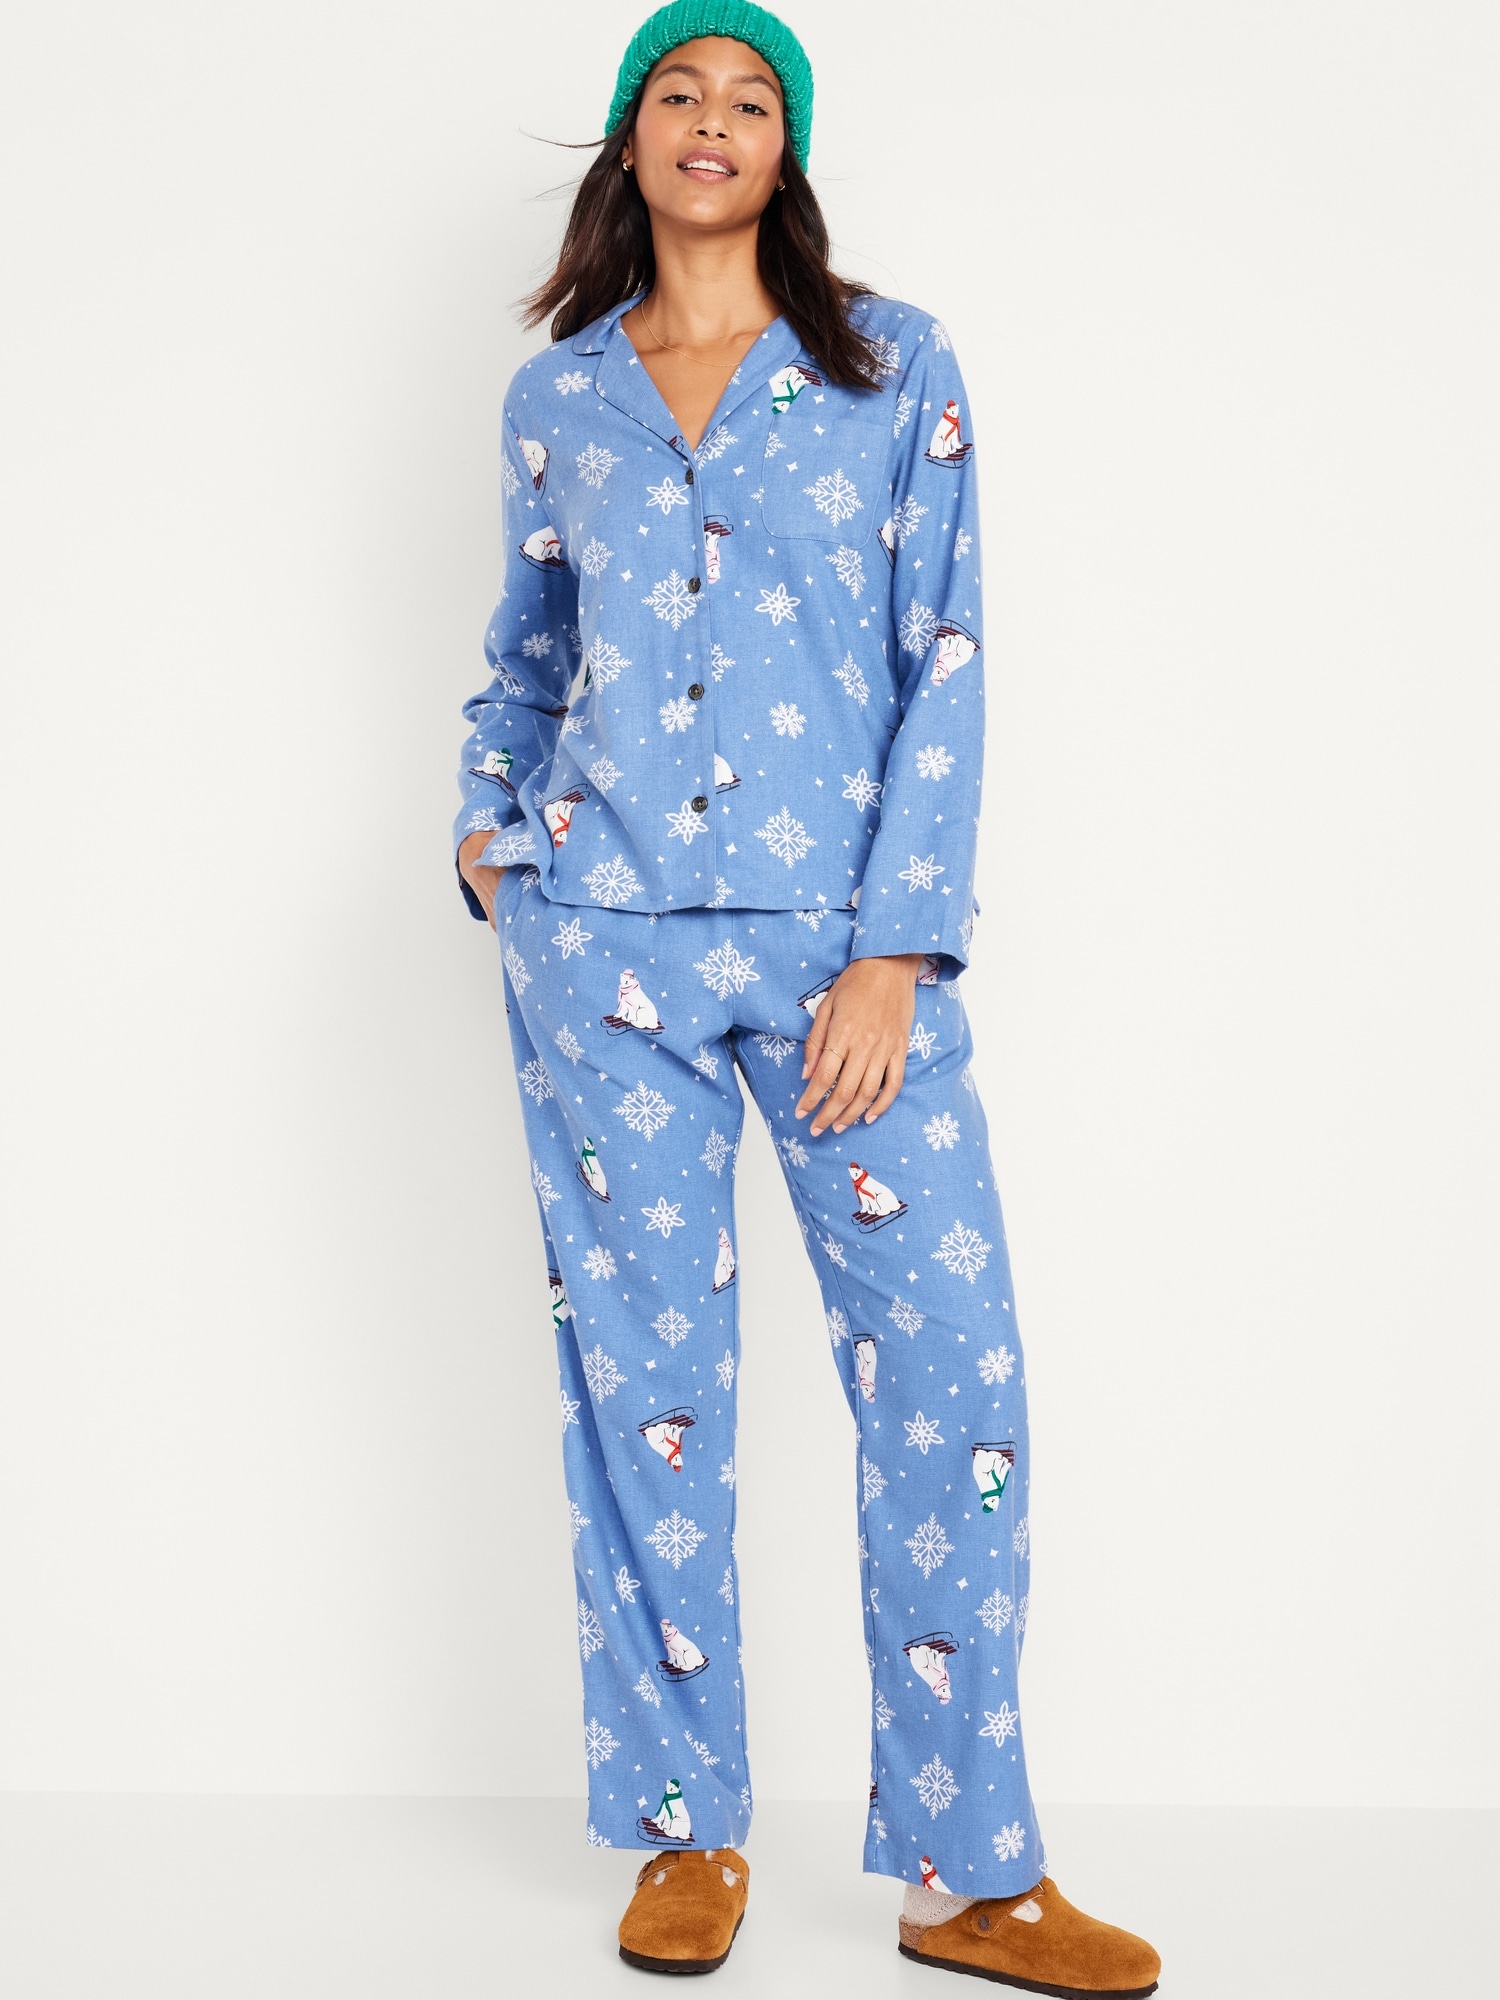 Old Navy, Intimates & Sleepwear, Old Navy Flannel Pajama Shorts Size  Large